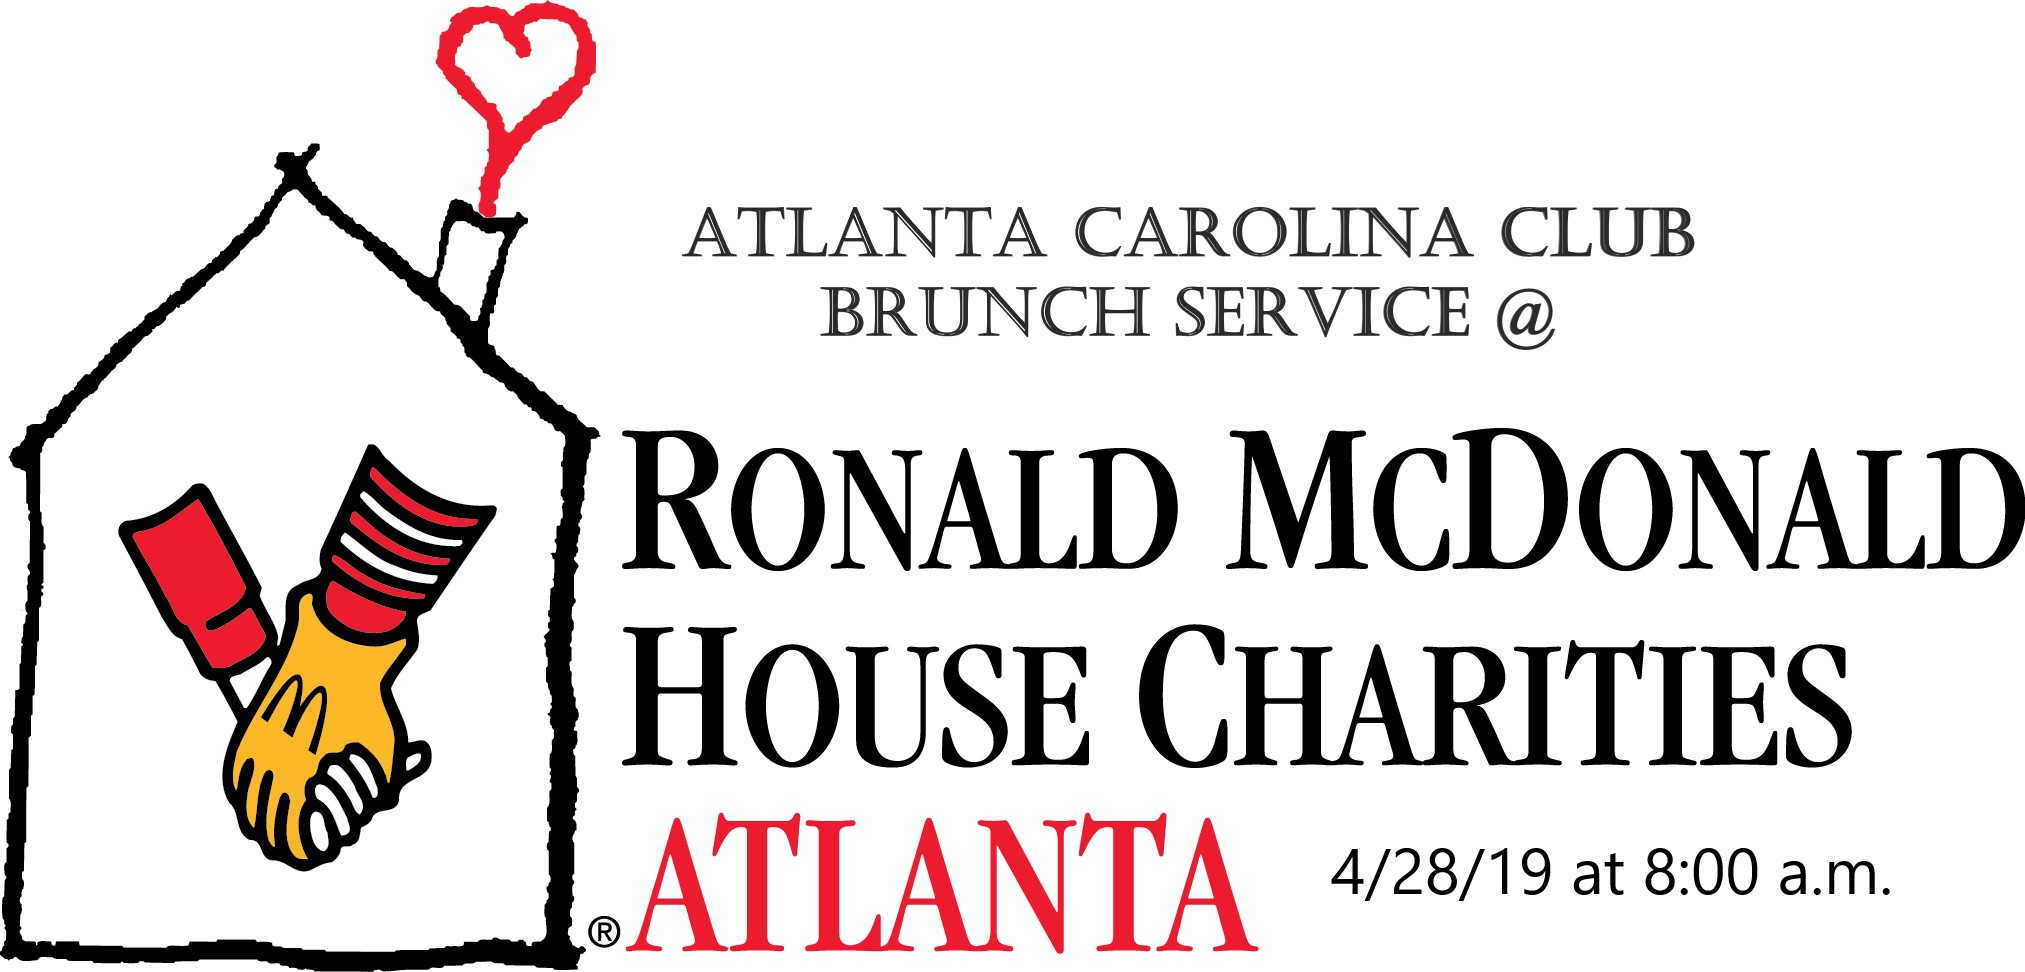 Atlanta Carolina Club at Ronald McDonald House